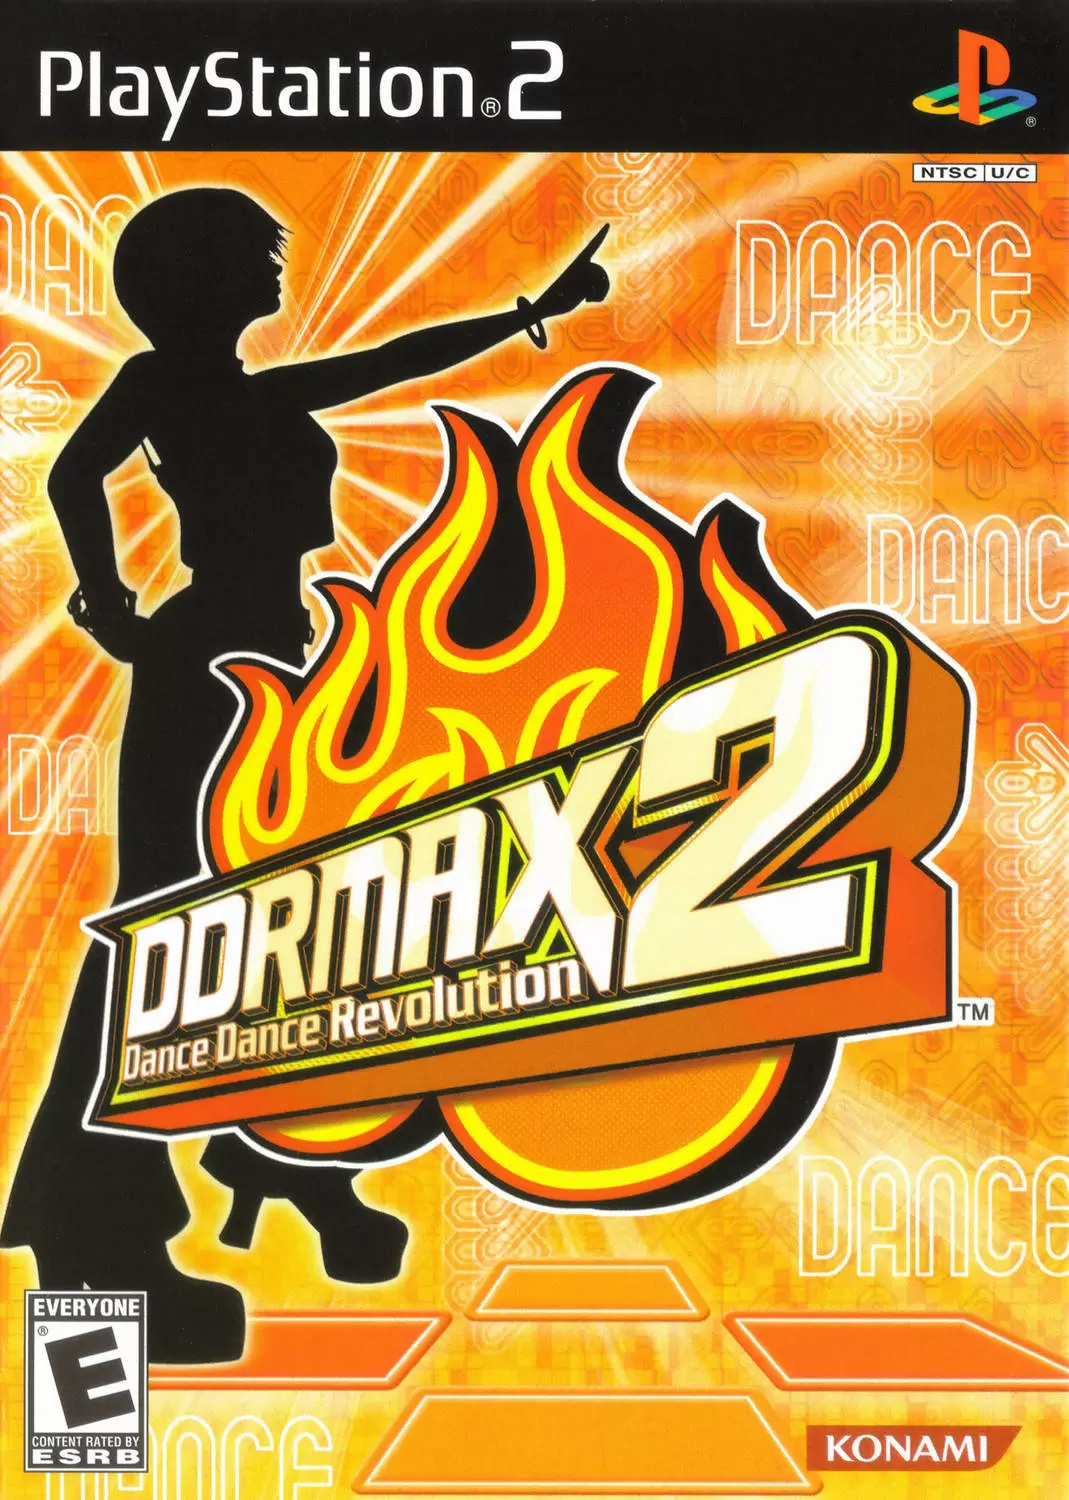 PS2 Games - DDRMAX2: Dance Dance Revolution